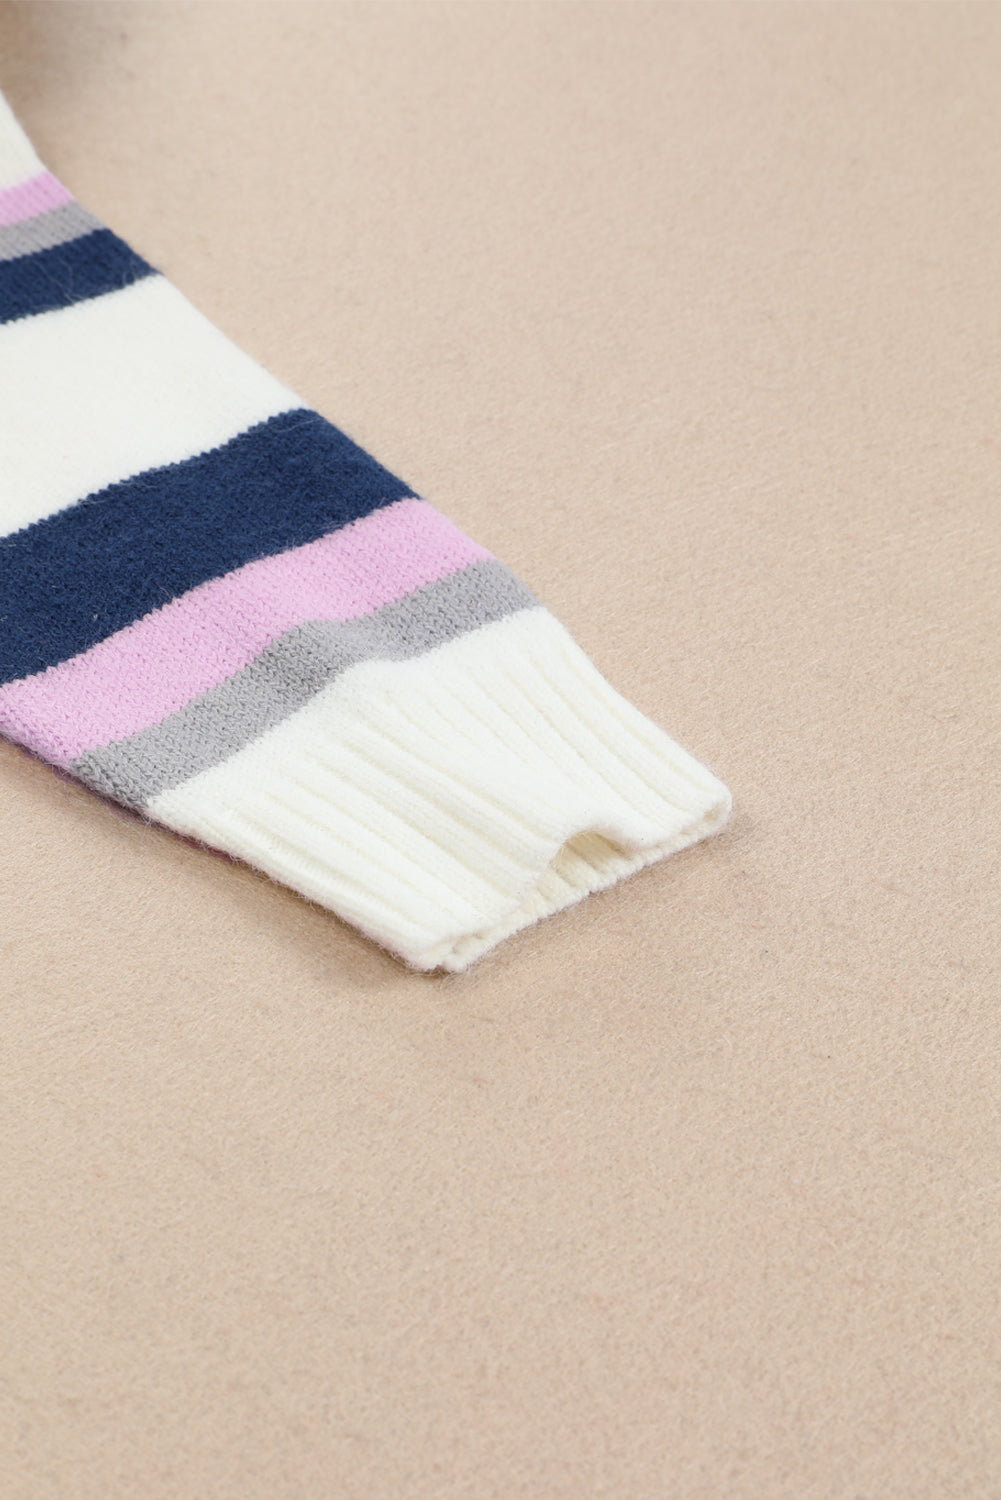 Bria Stripe Plus Size Striped Hooded Knit Sweater - The Bohemian Closet